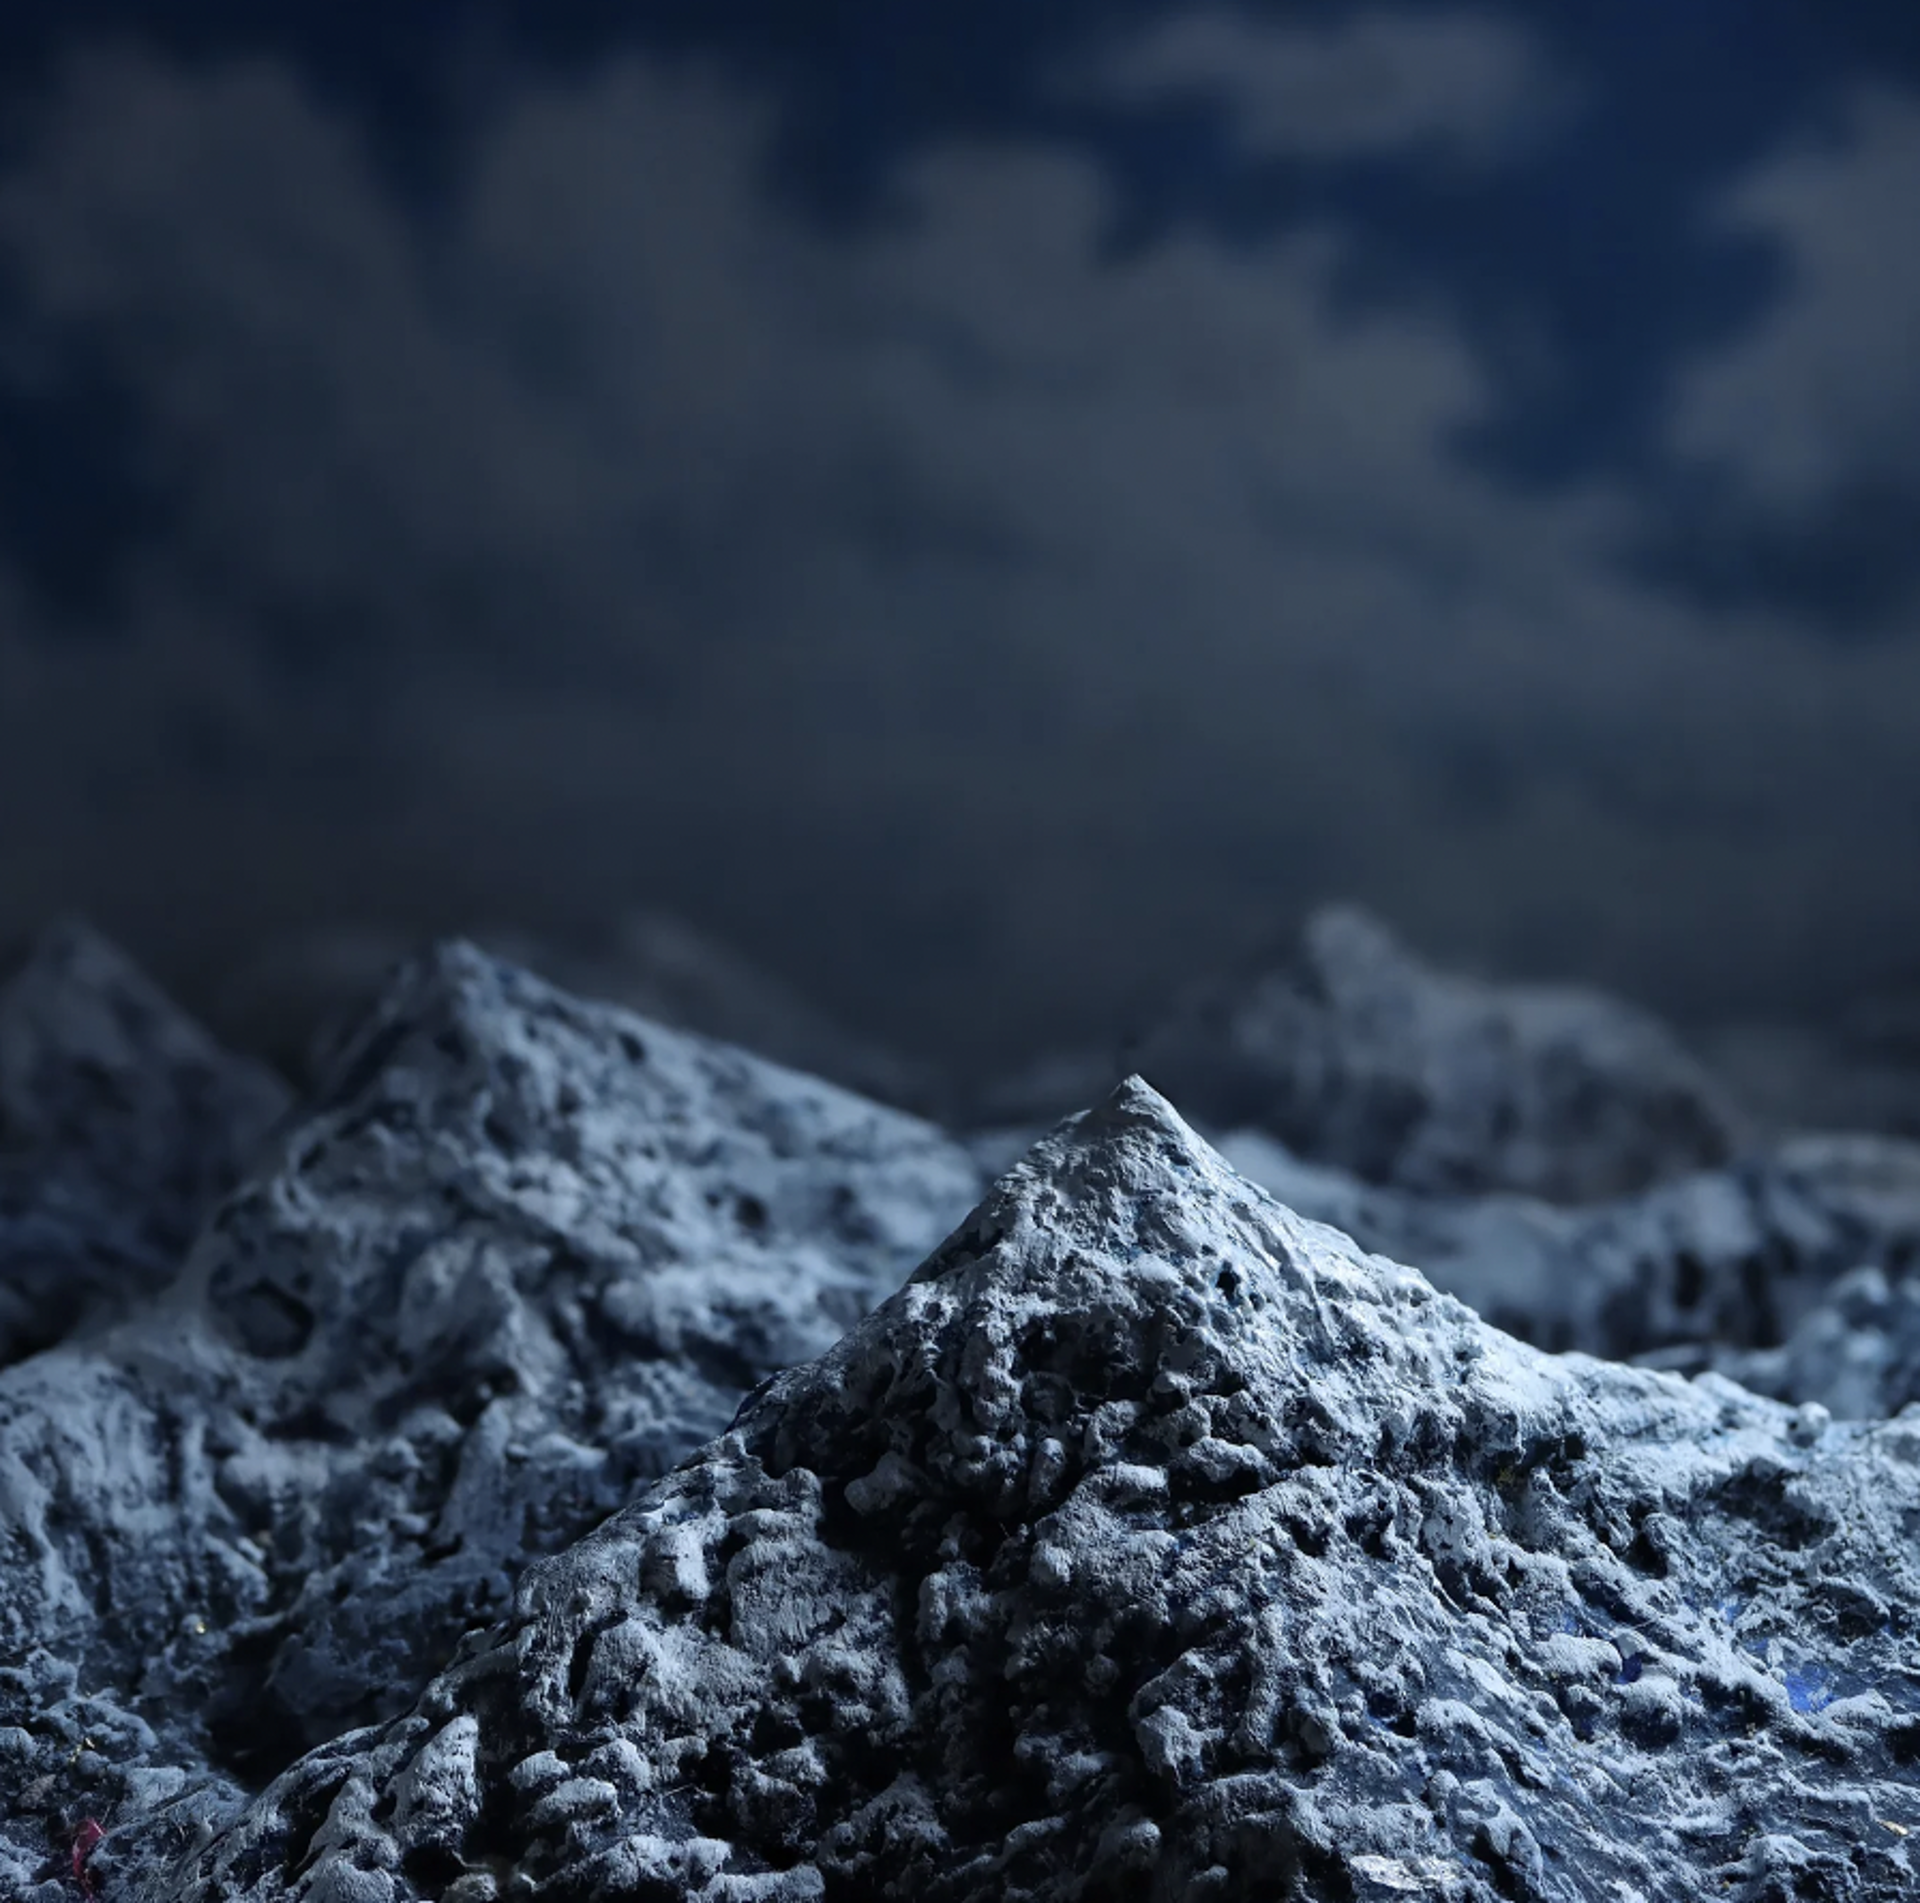 Mountain Range at Night by Stephen Dorsett